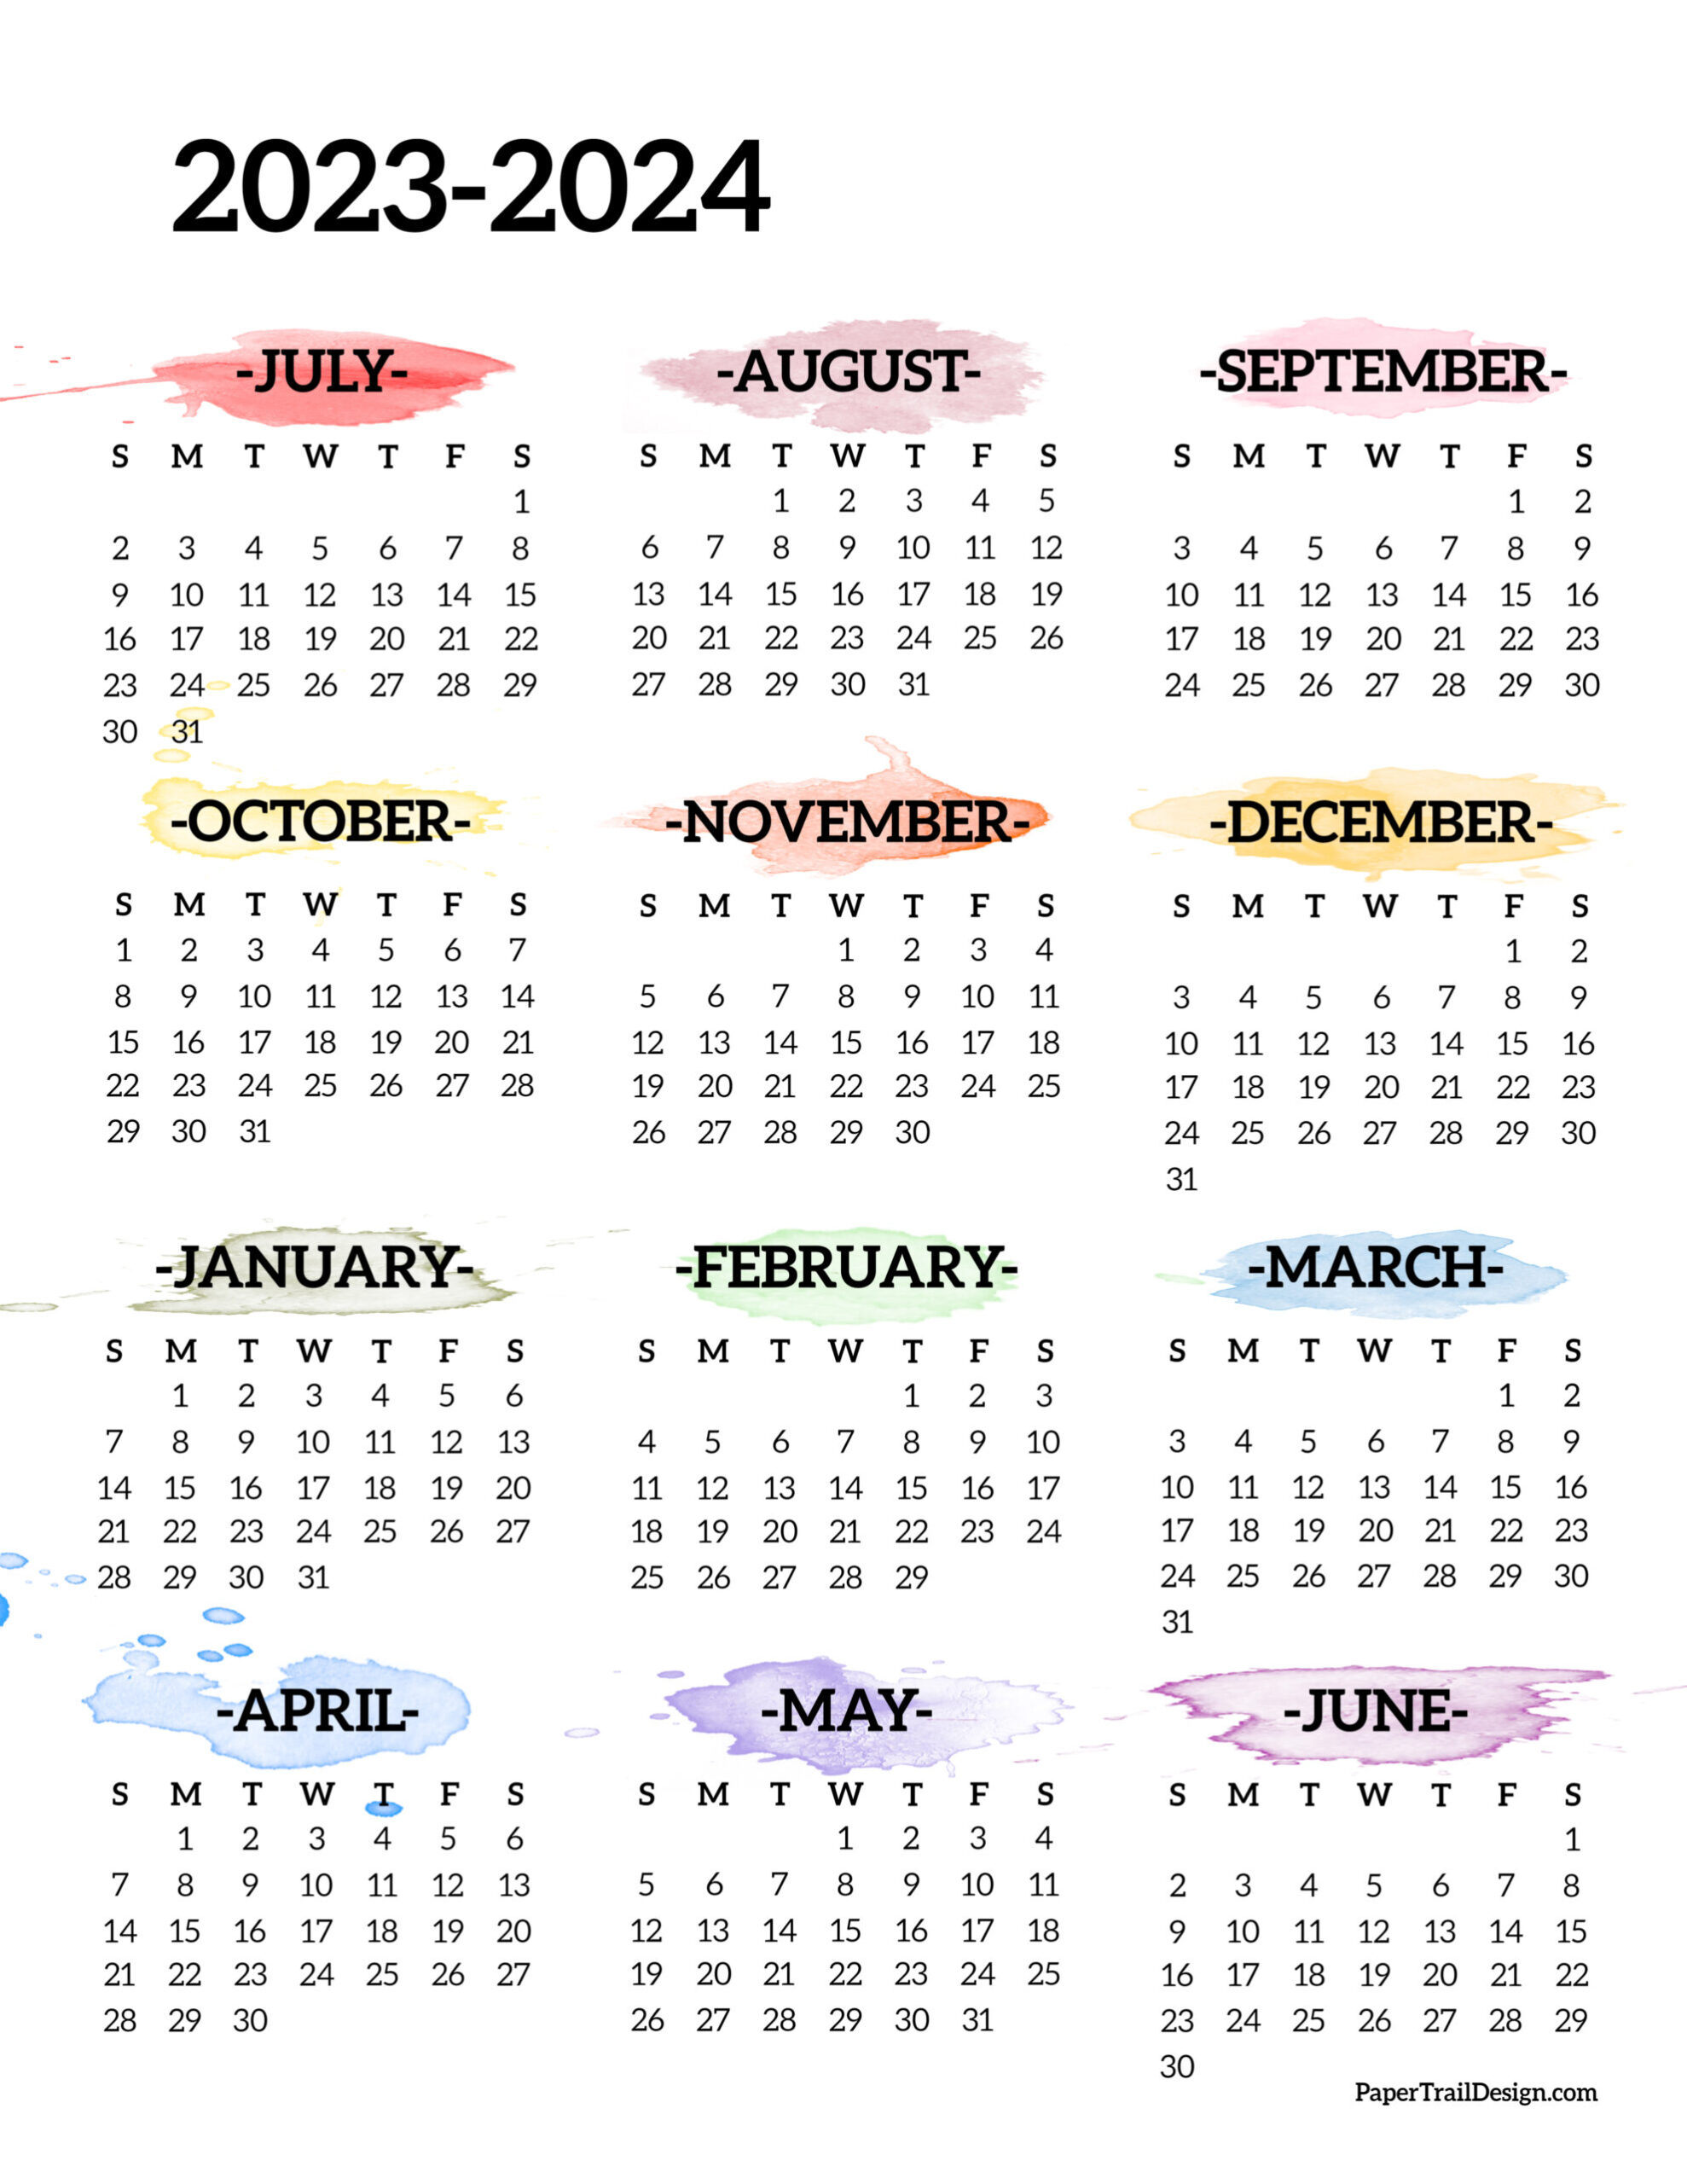 2023-2024 School Year Calendar Free Printable - Paper Trail Design for August 2023-May 2024 Calendar Printable